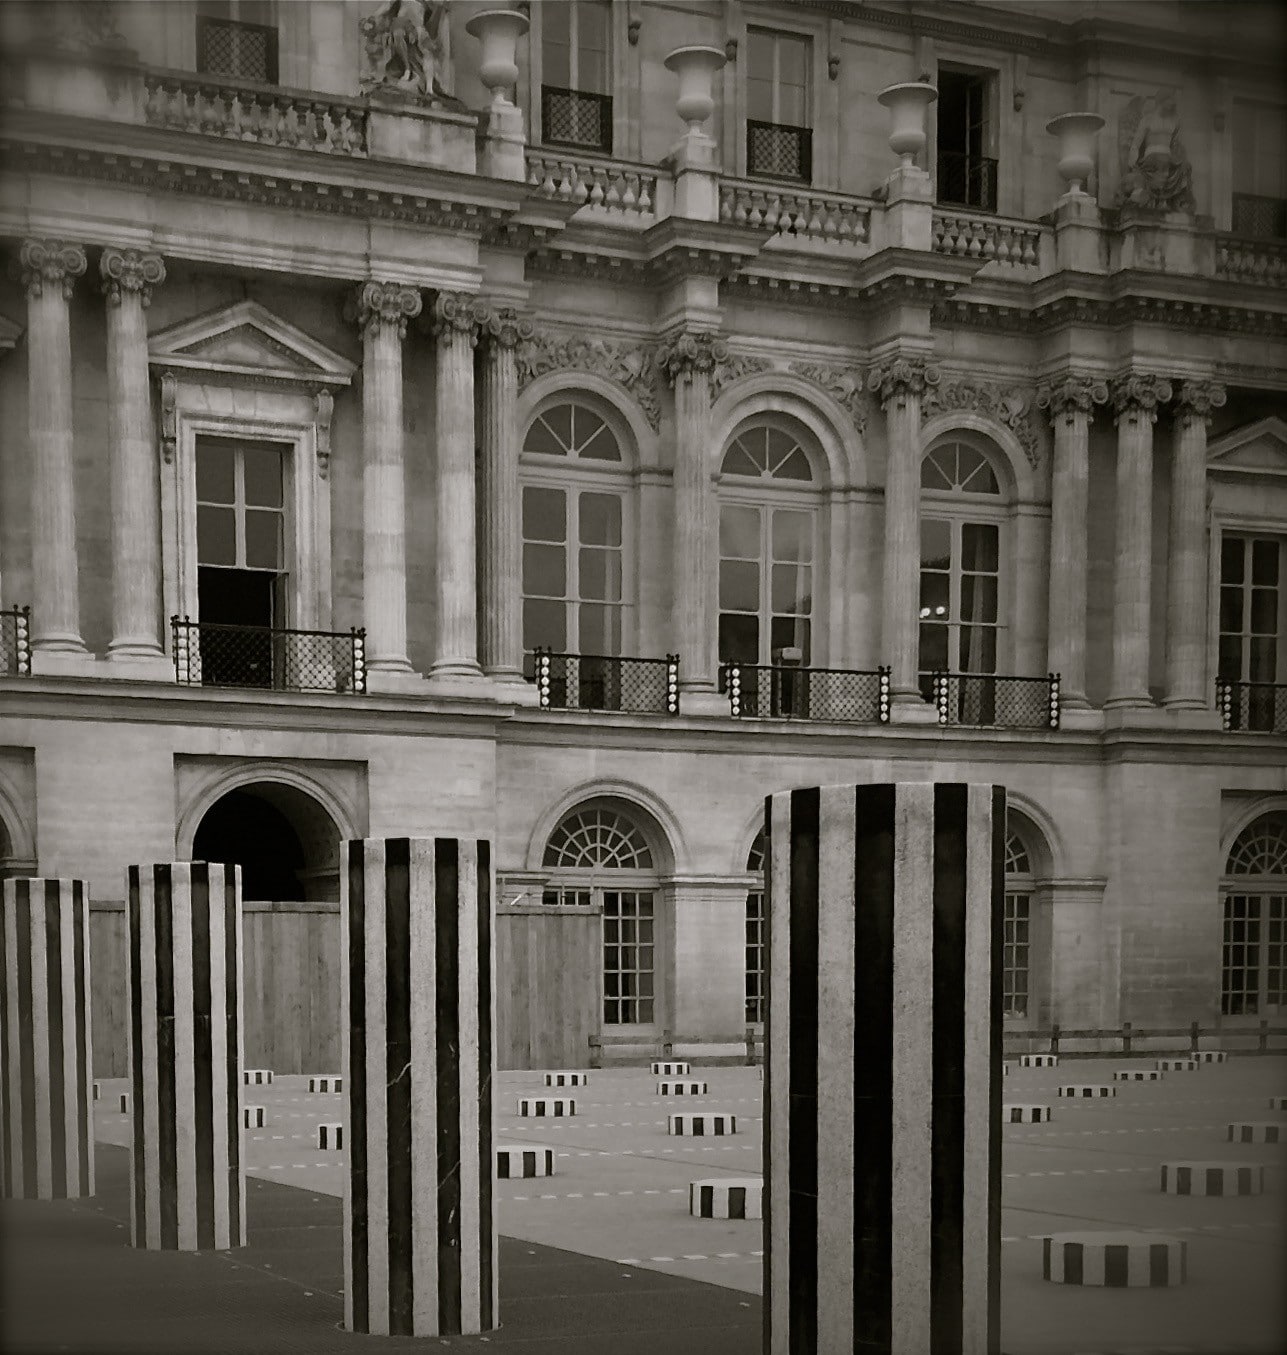 Photo of the striped art installation of Daniel Buren in Paris.